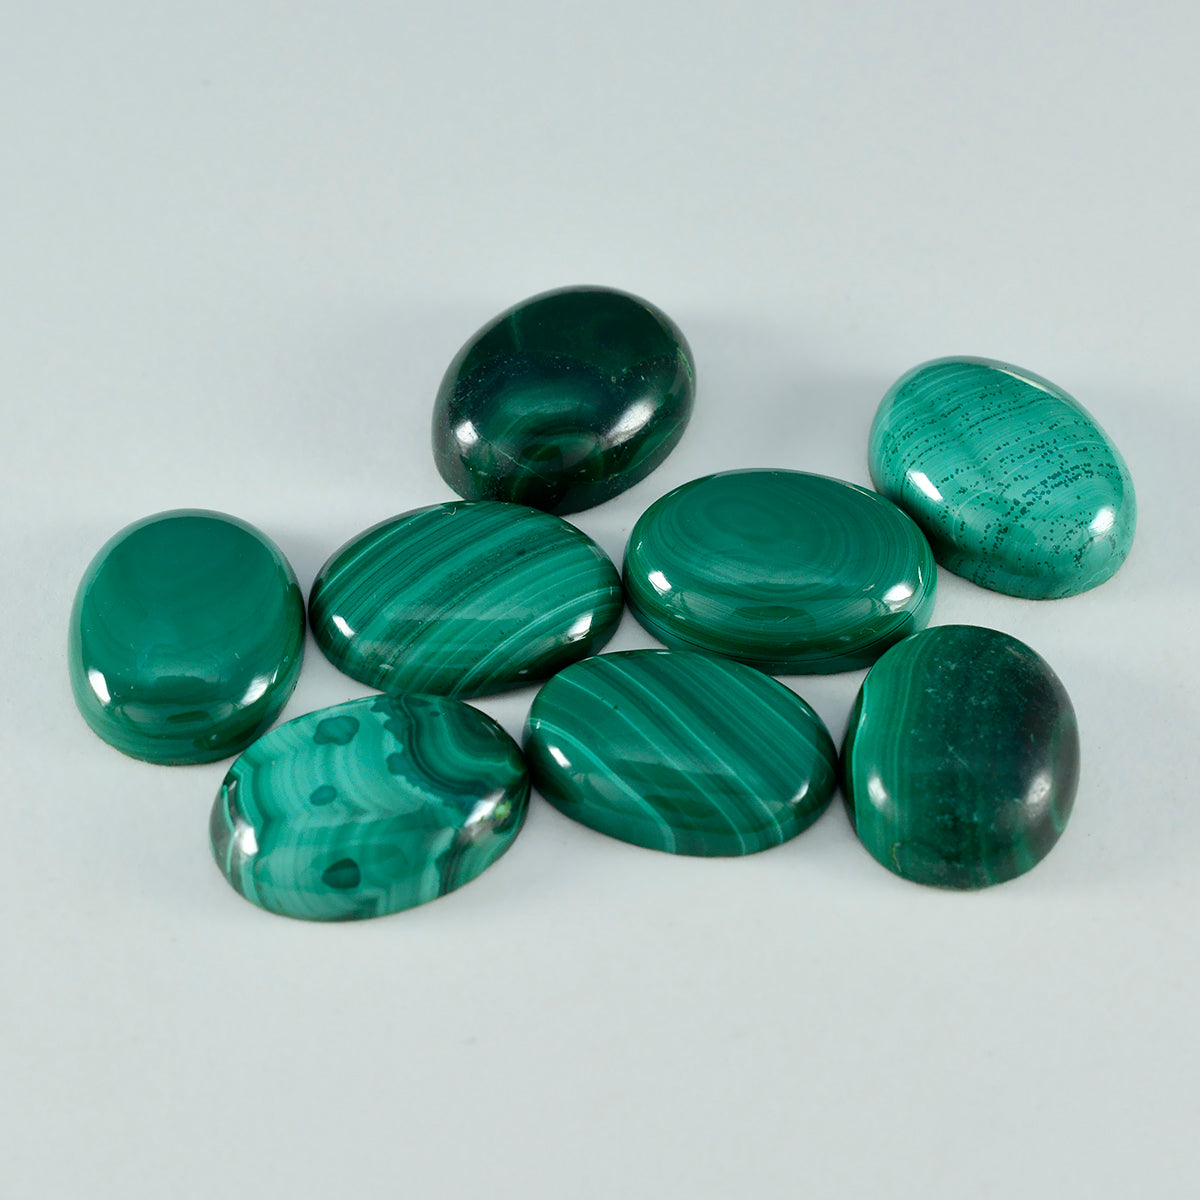 riyogems 1 pezzo cabochon di malachite verde 10x12 mm di forma ovale, una pietra sciolta di qualità